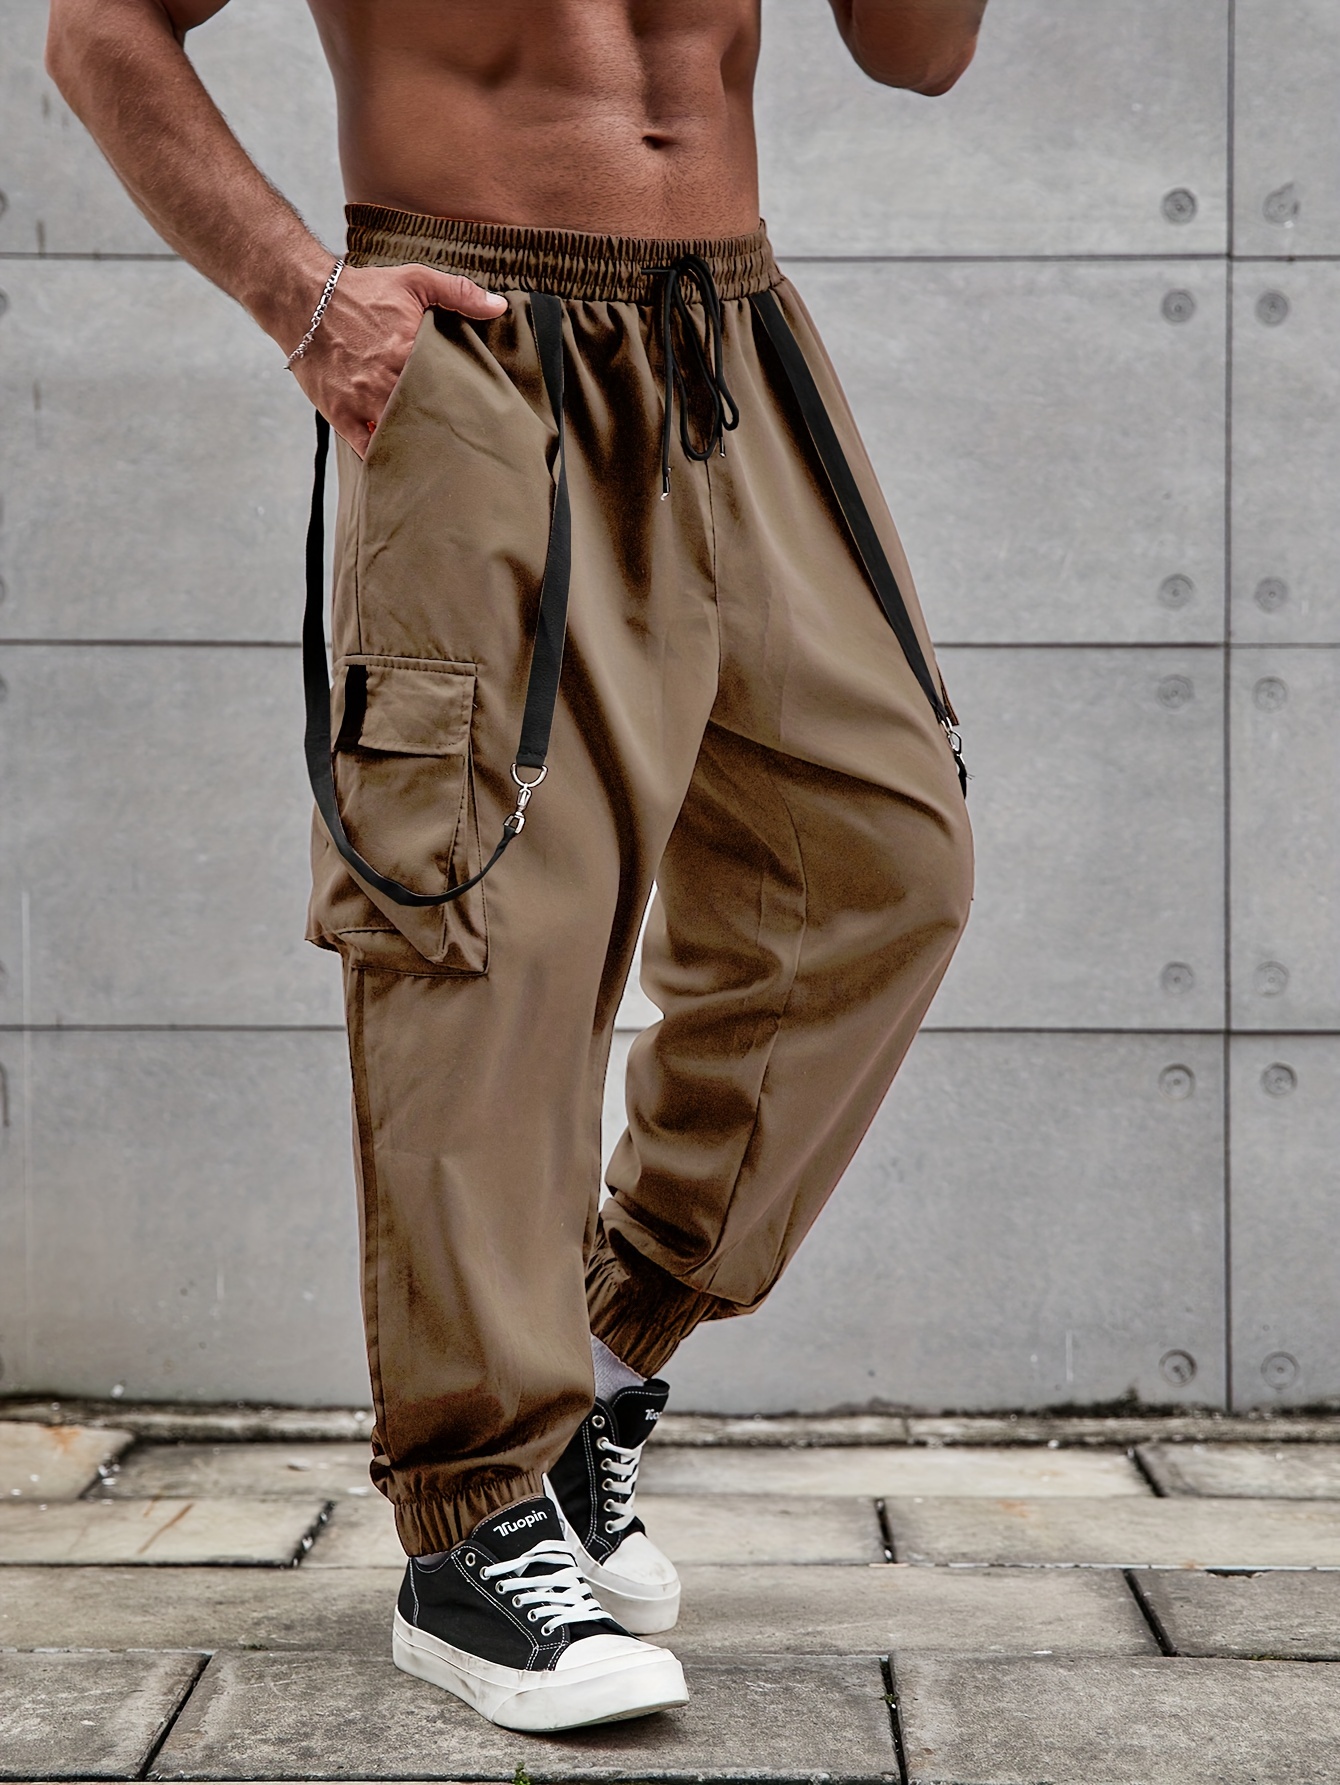 Men's Brown Pants, Cargos, Sweatpants & Dress